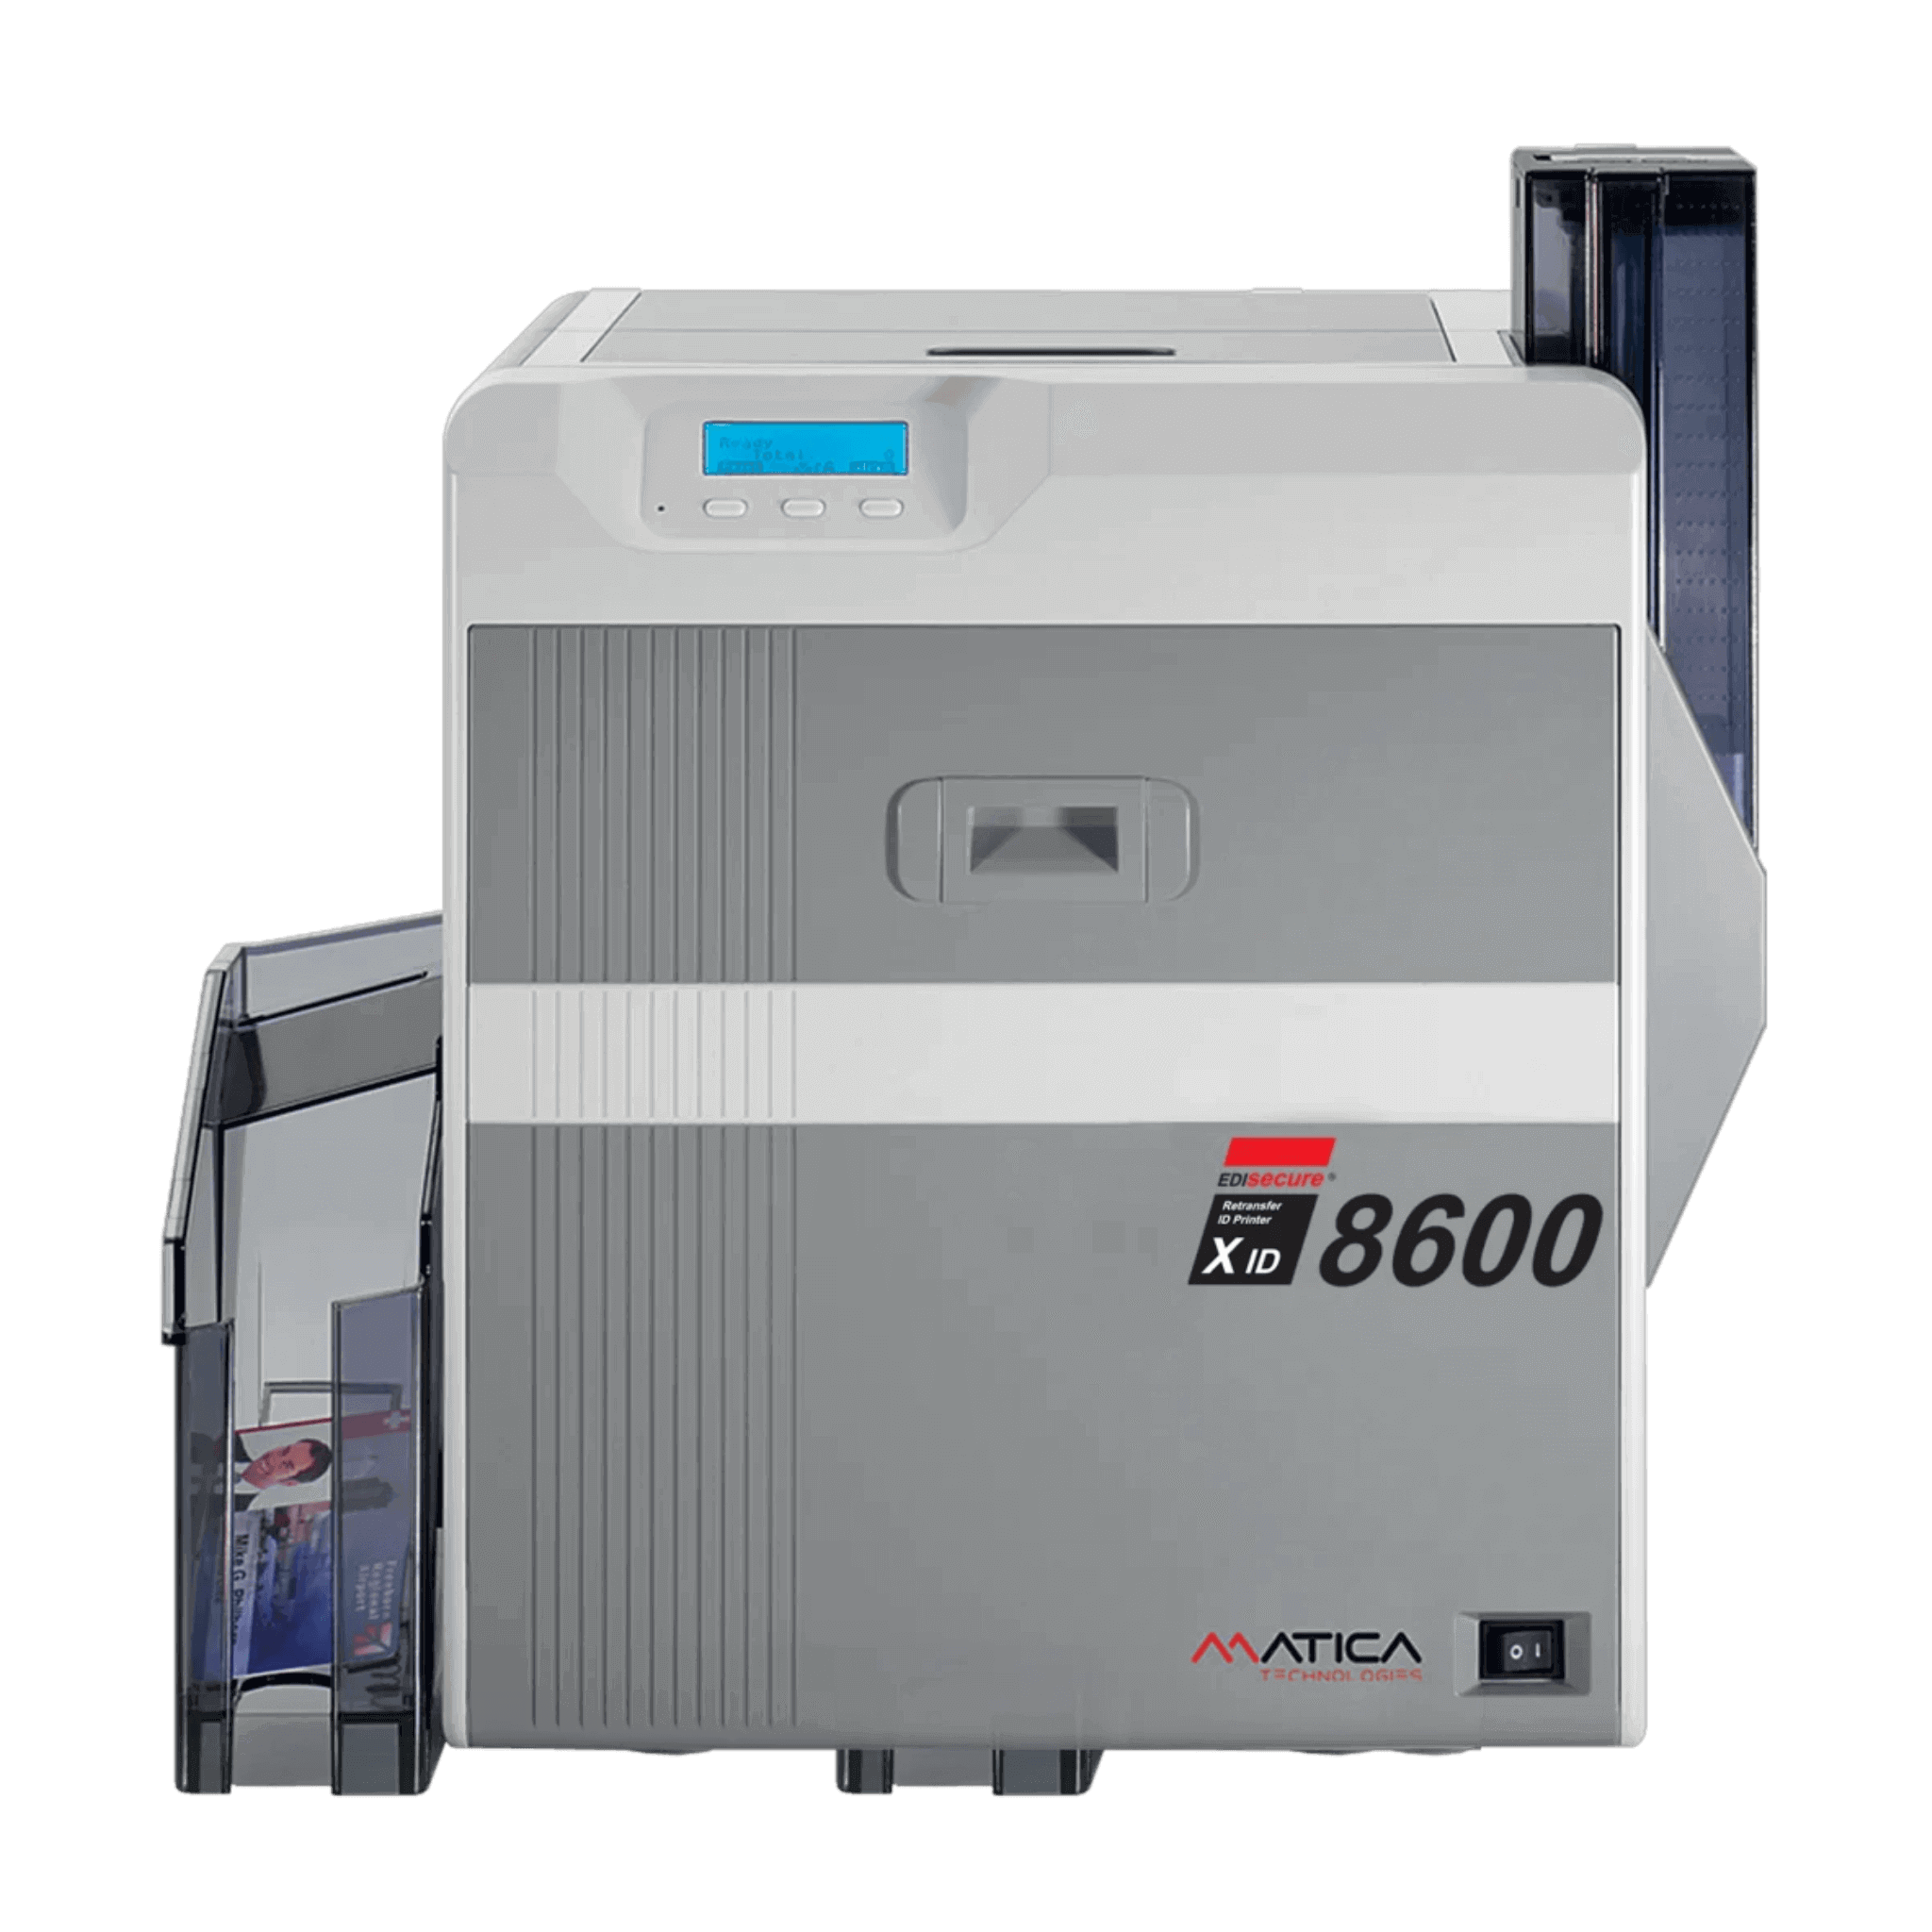 Matica XID8600 Retransfer ID Card Printer, Double Sided